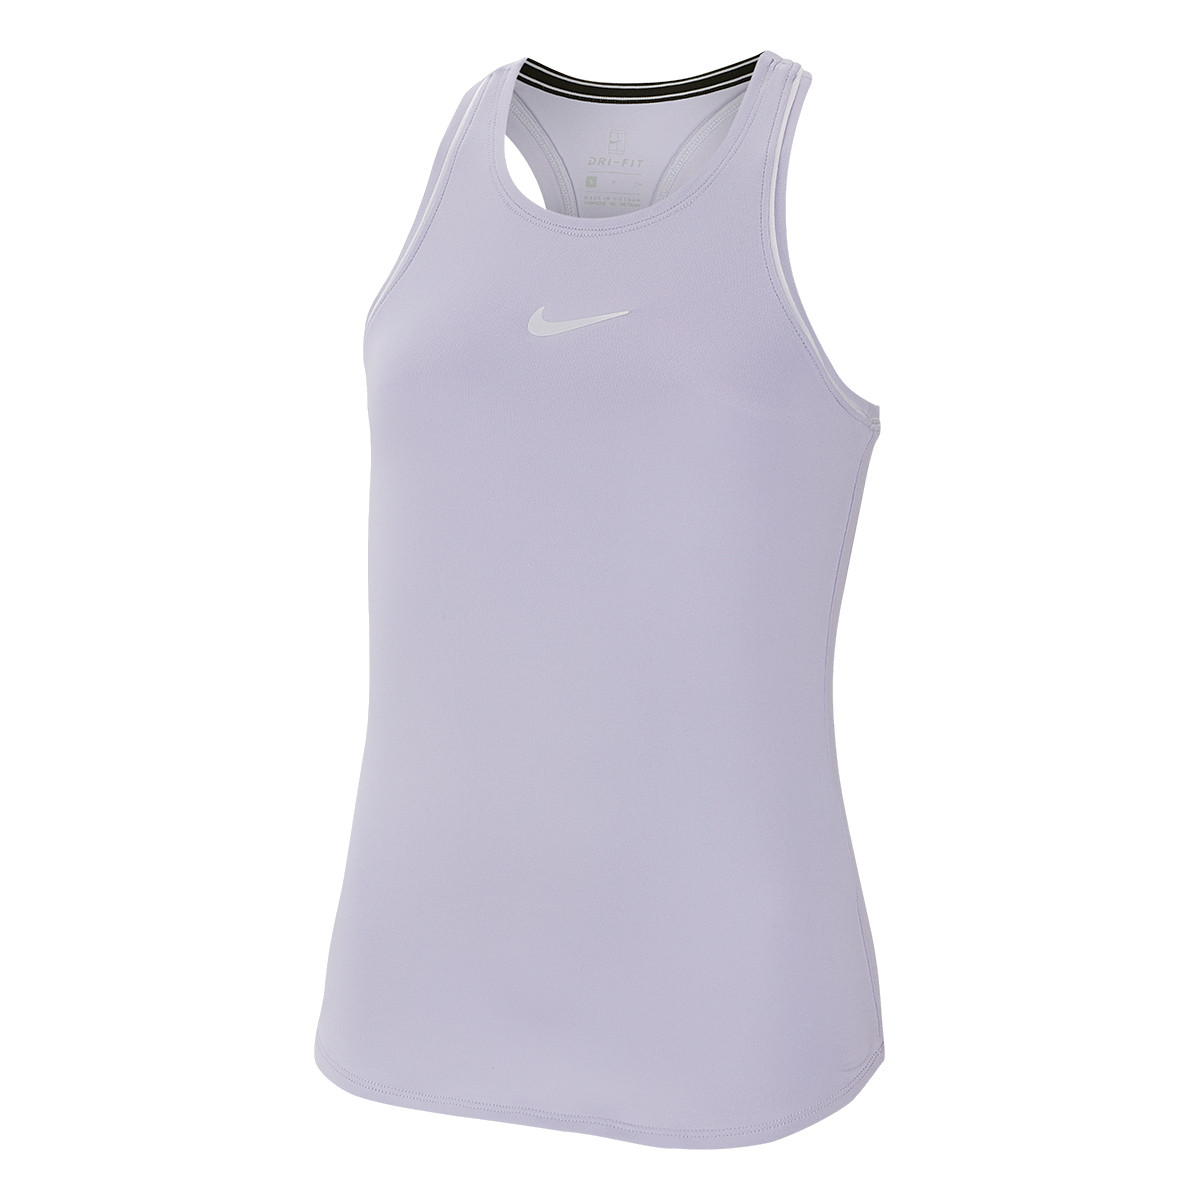 ar2501-508_nikecourt-dri-fit-girl-s-tank-oxygen-purple-white